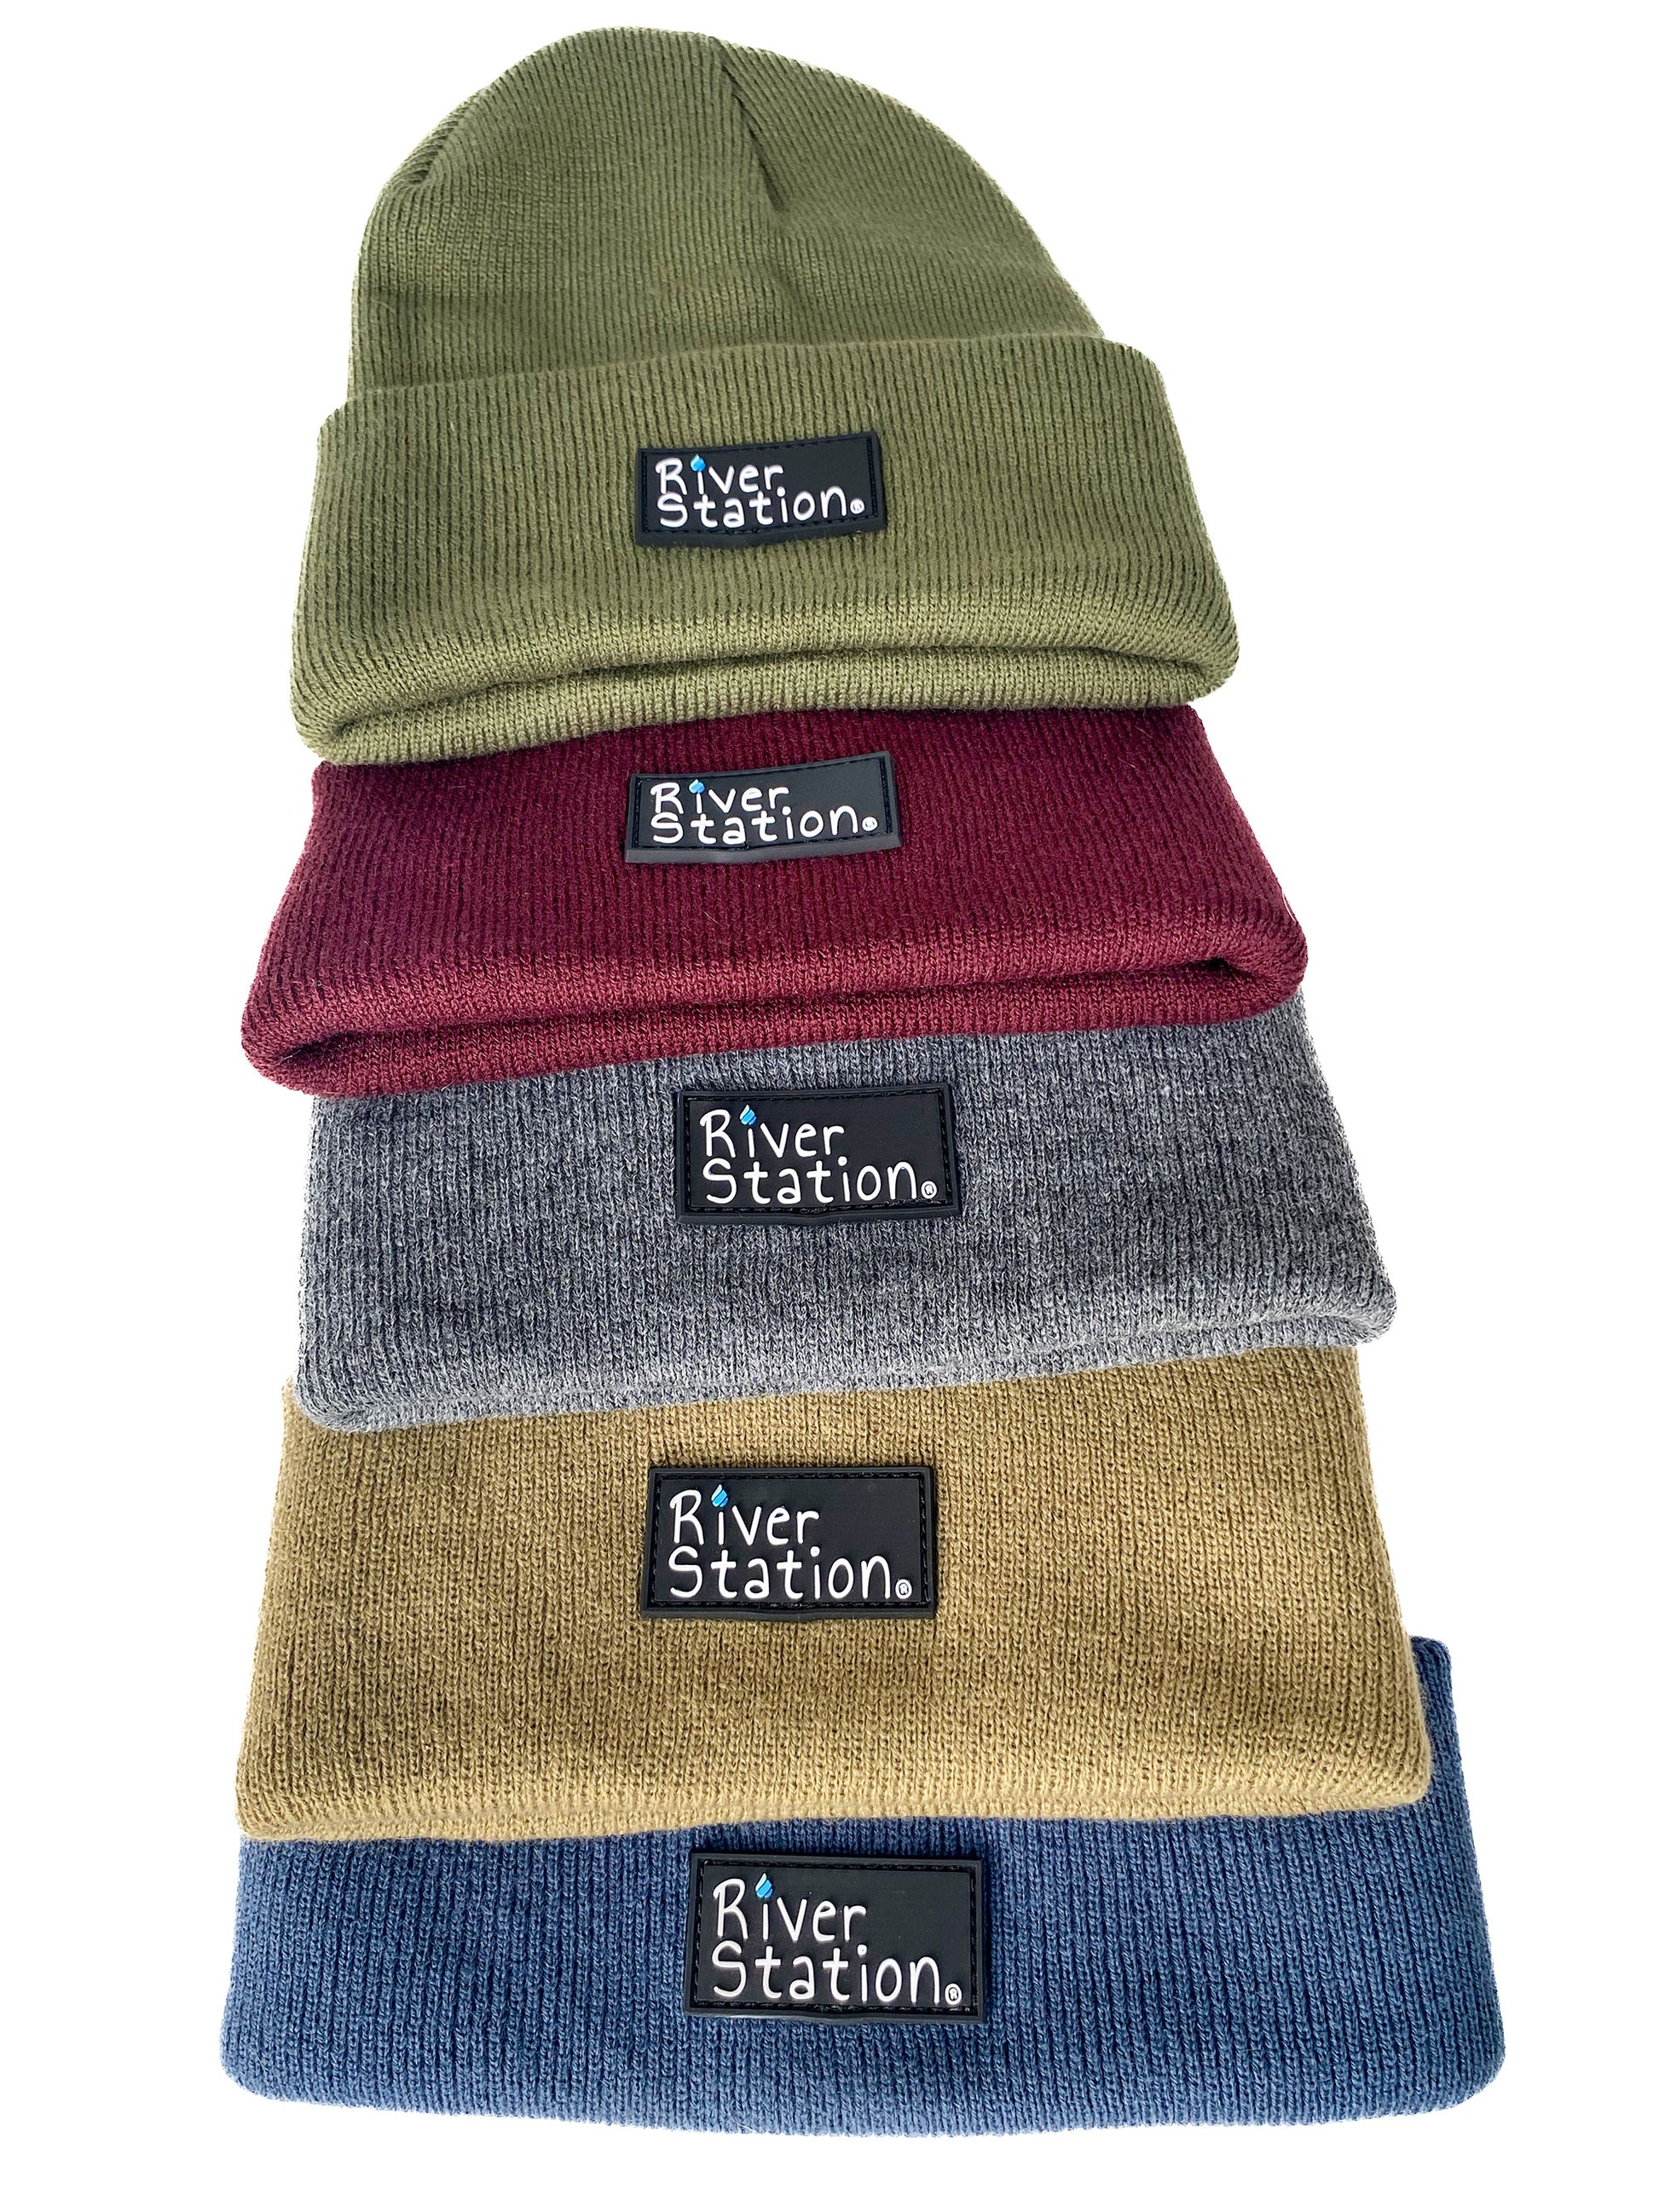 Winter Hat beanies multiple colors